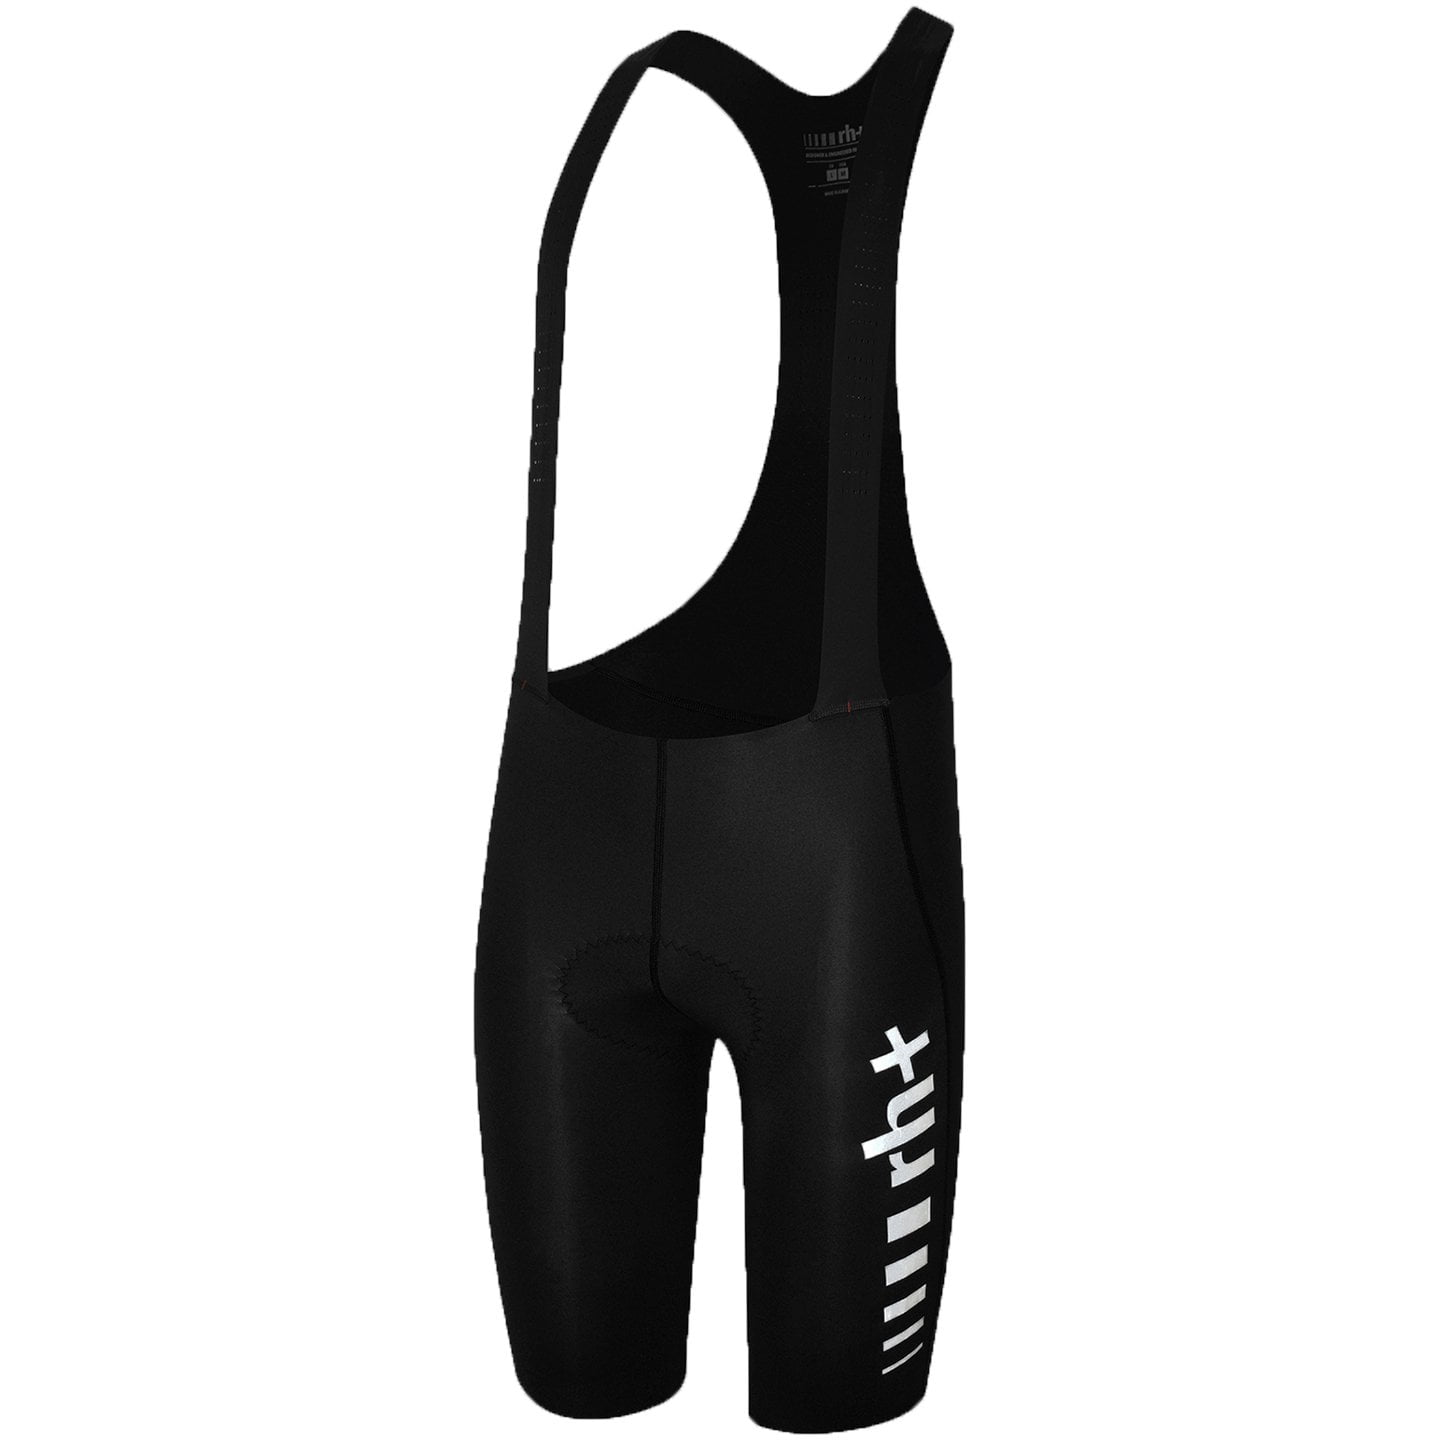 RH+ Code Bib Shorts, for men, size 2XL, Cycle shorts, Cycling clothing